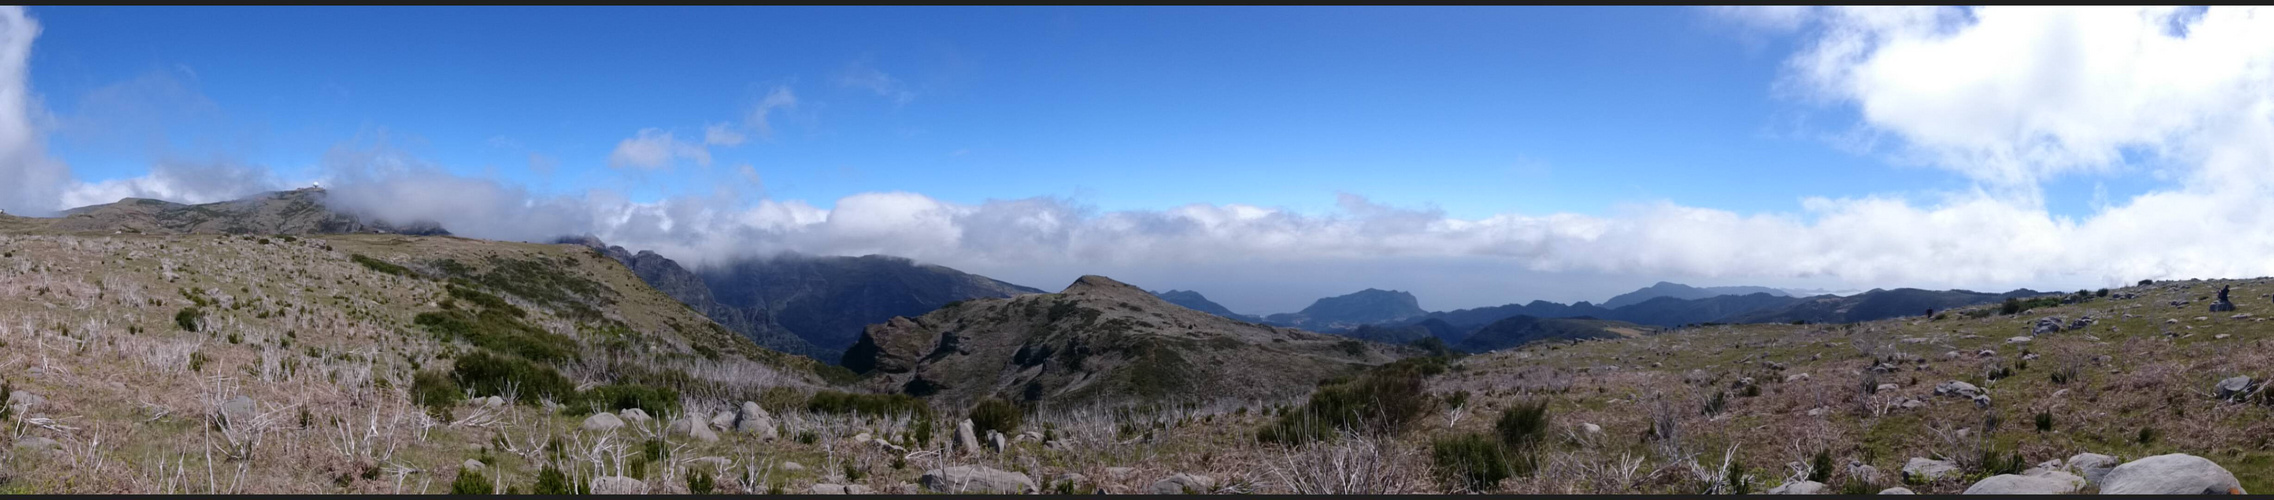 Panorama mit Blick auf Pico do Arieiro